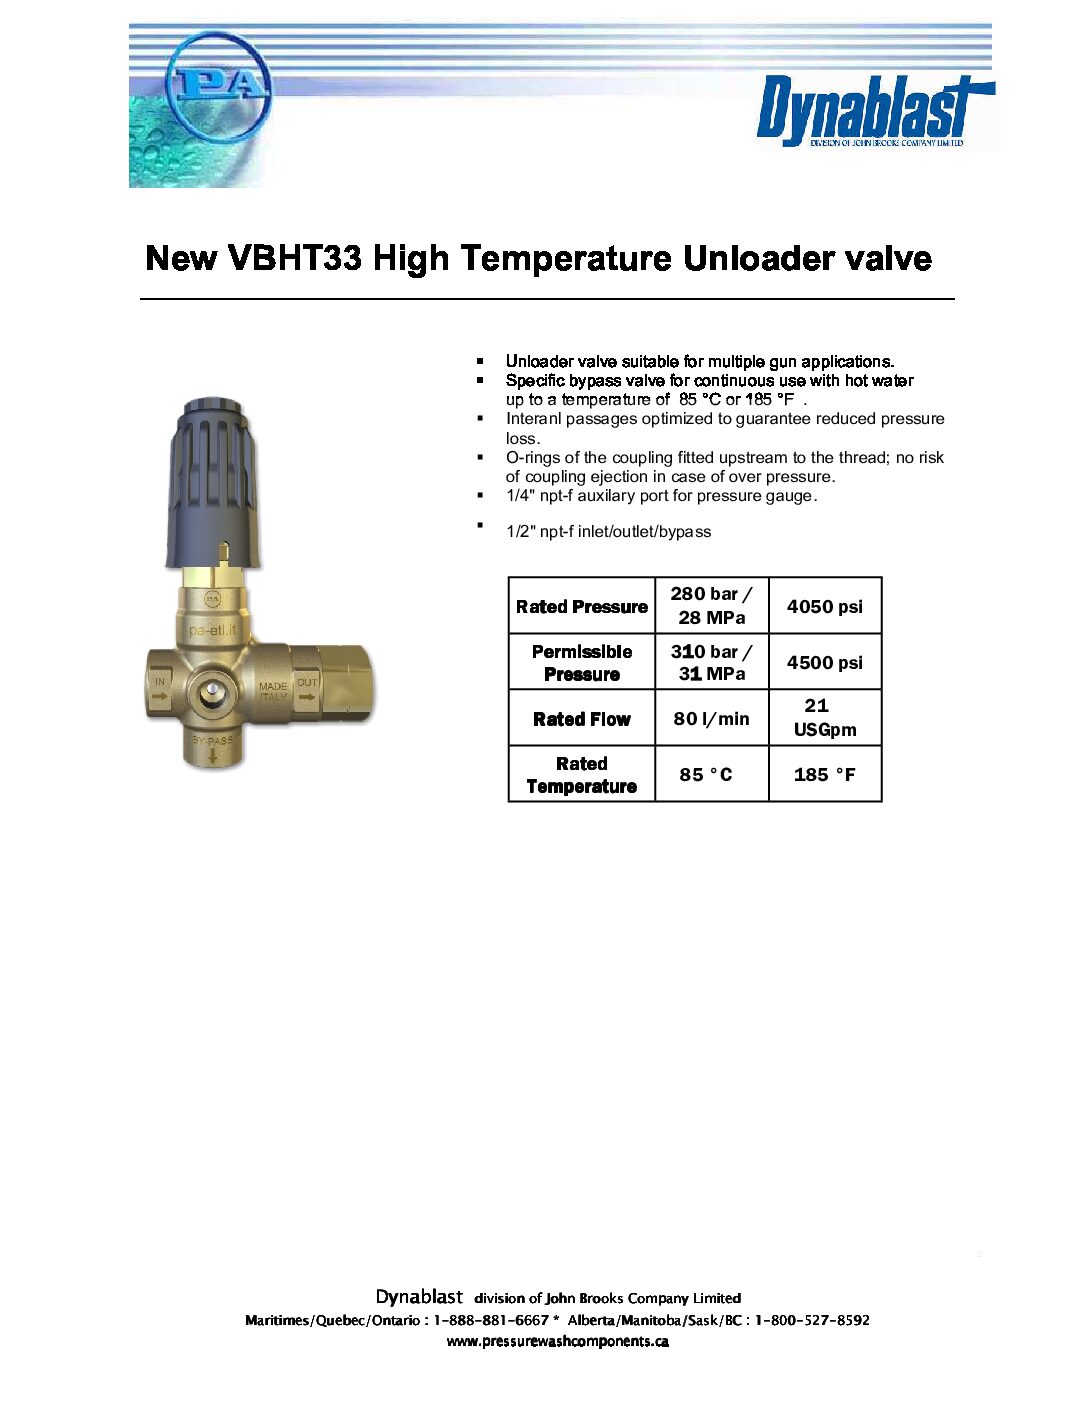 PA VBHT33 High Temperature Unloader Valve sell sheet